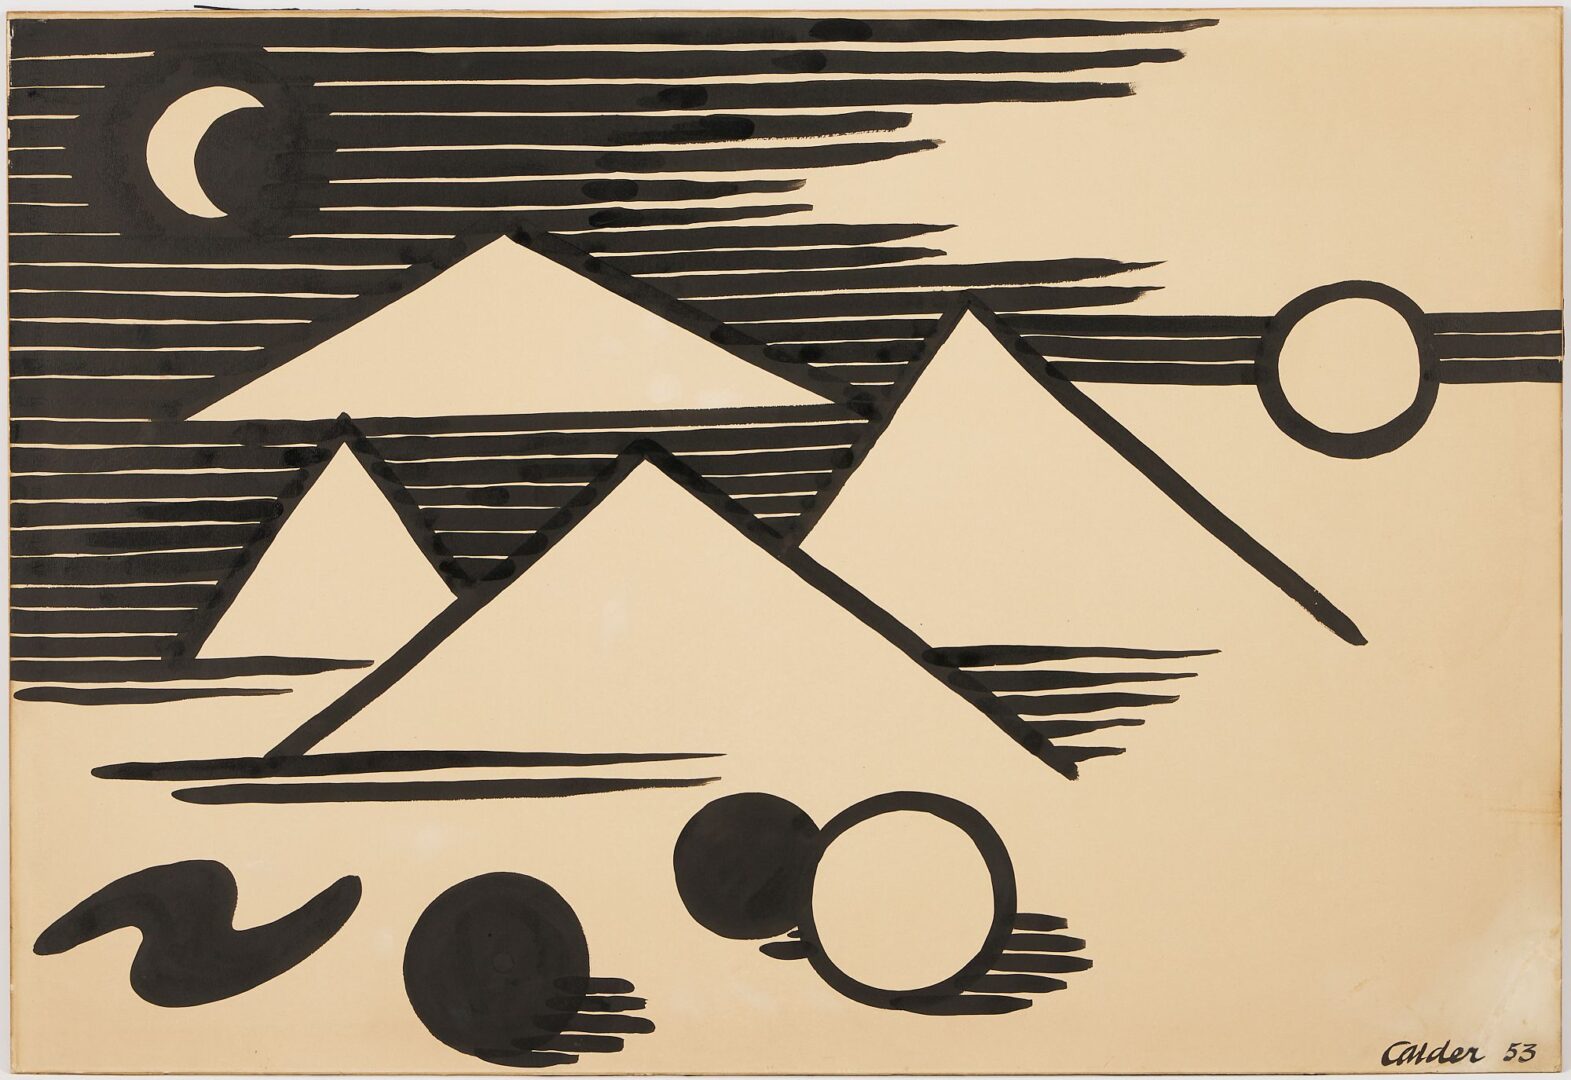 Lot 363: Alexander Calder Ink Painting, Landscape w/ Pyramids & Moon, 1953